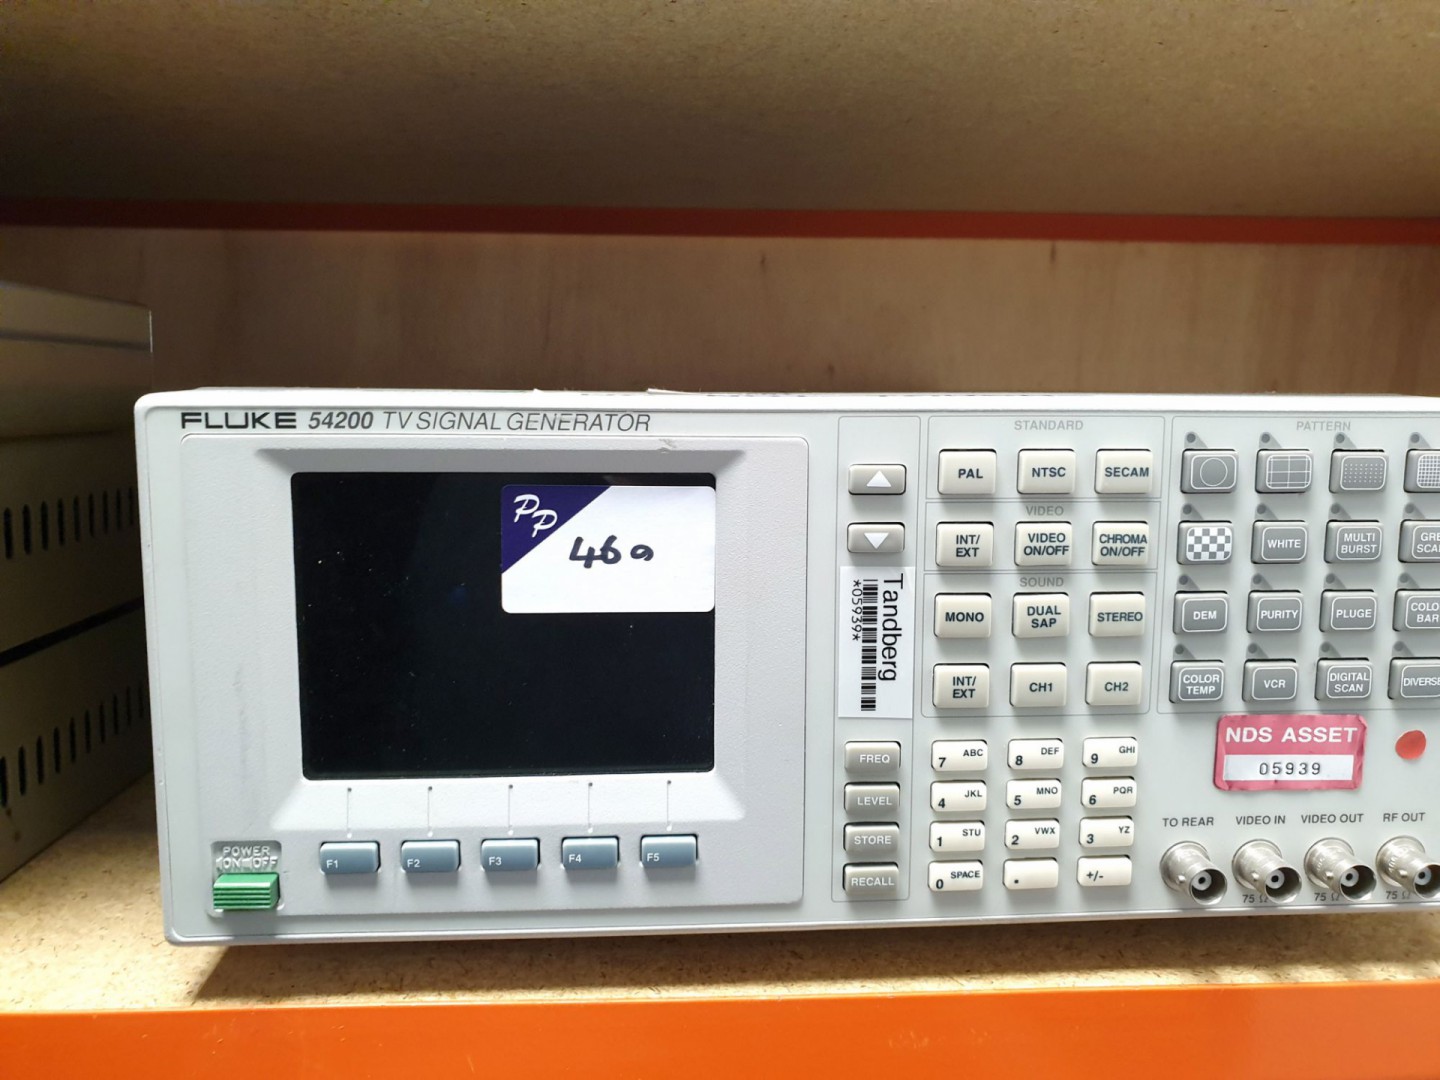 Fluke 54200 TV signal generator